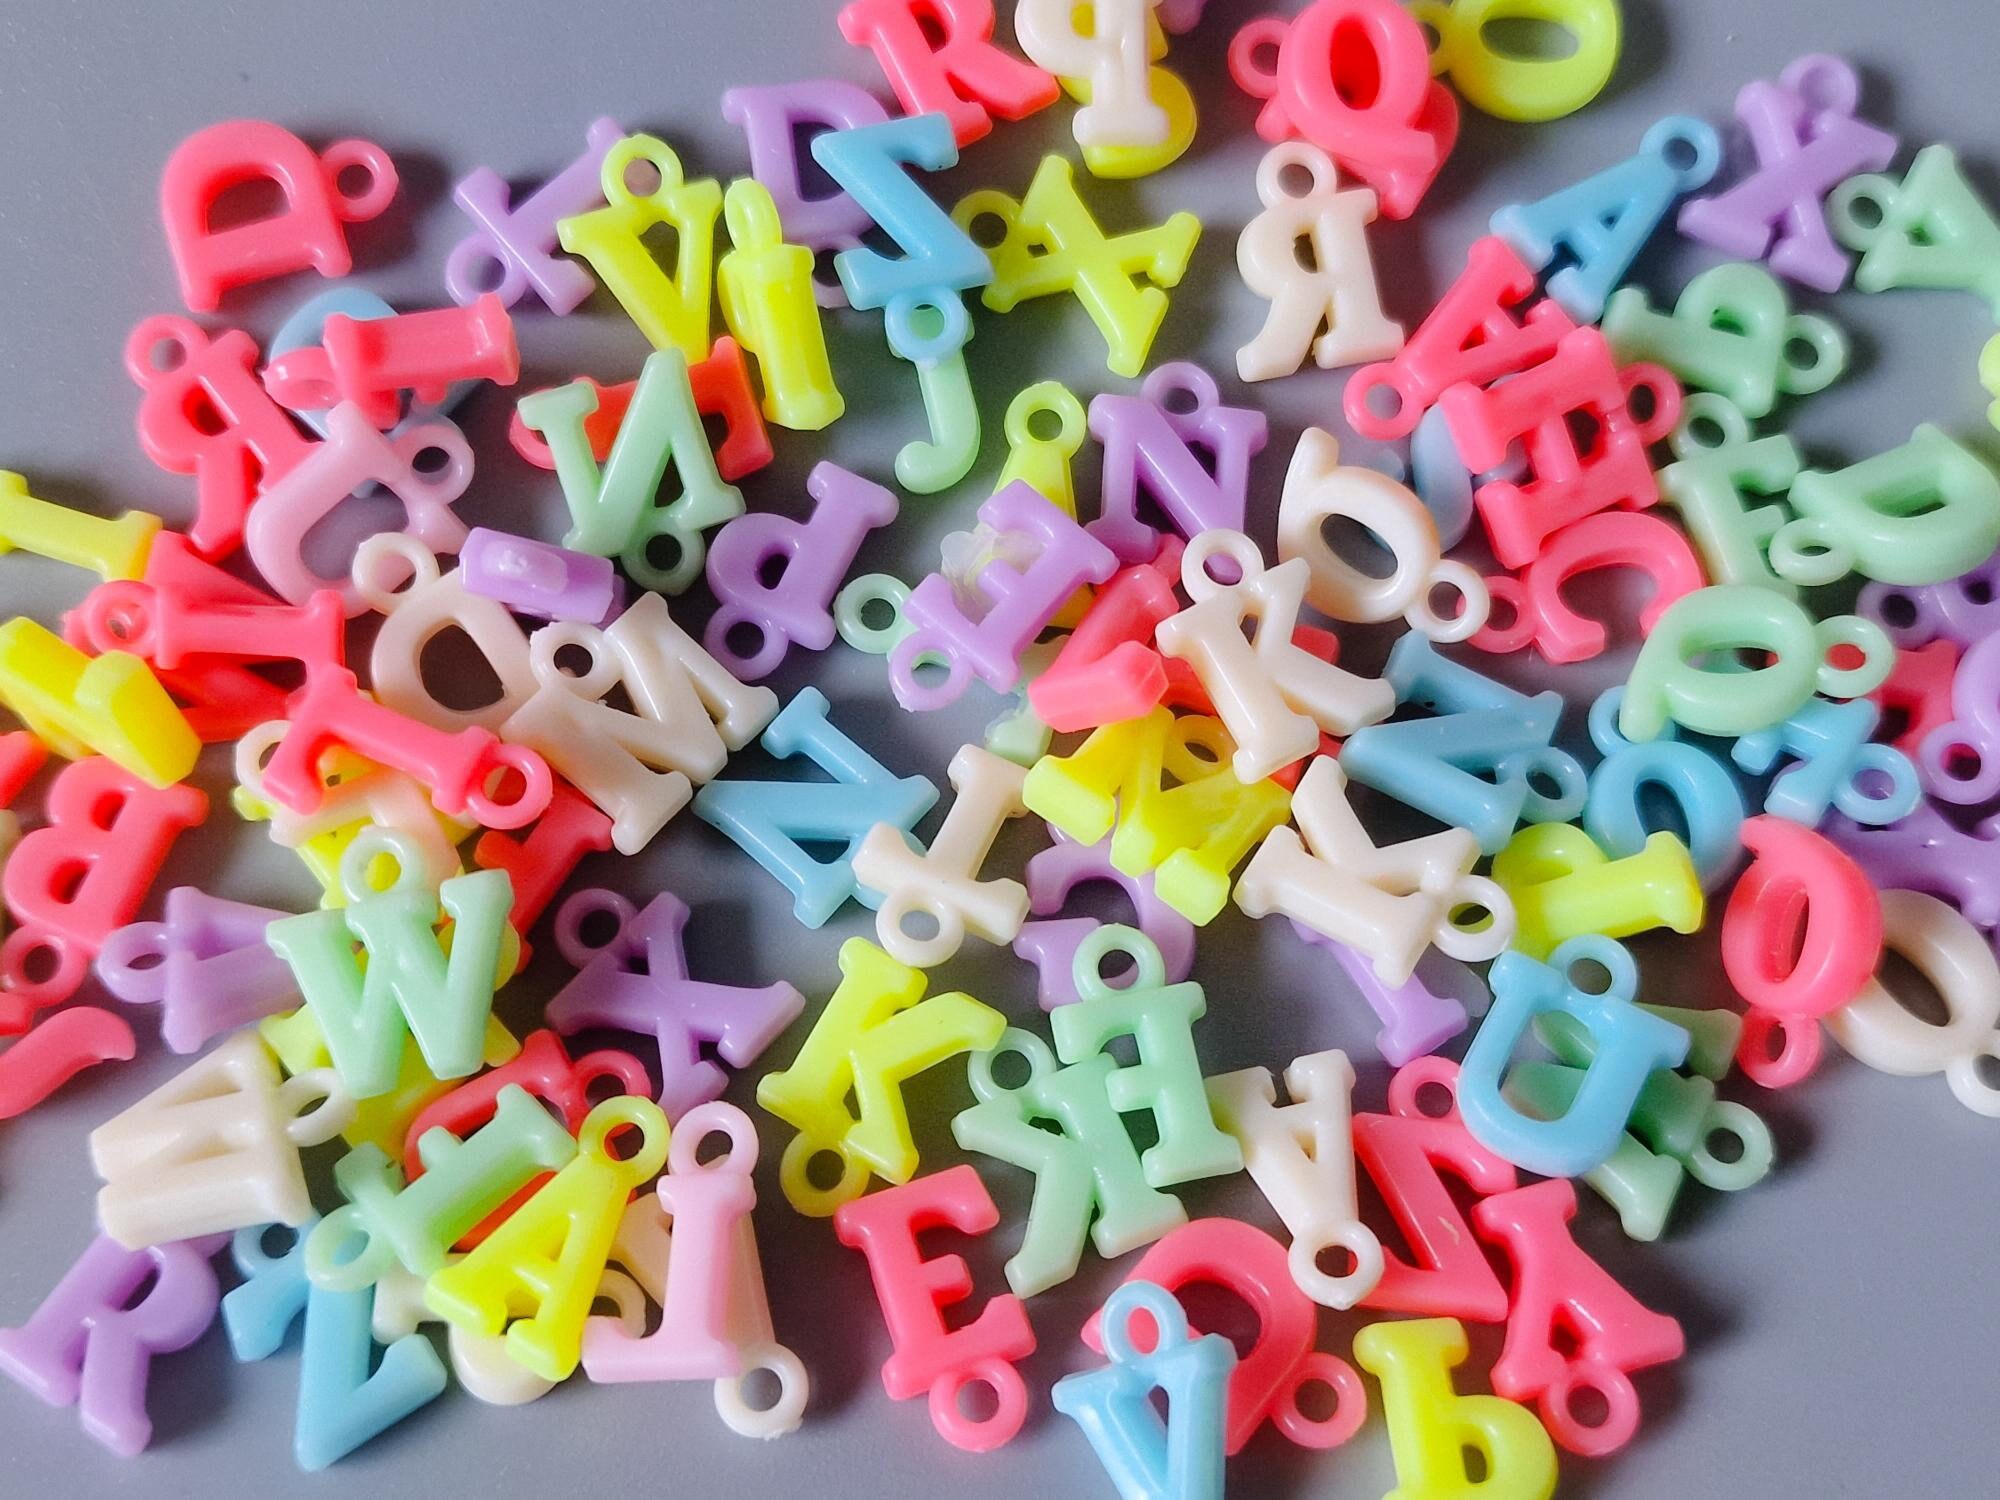 7mm White Number Beads Round Alphabet Style Craft Kids Beading UK